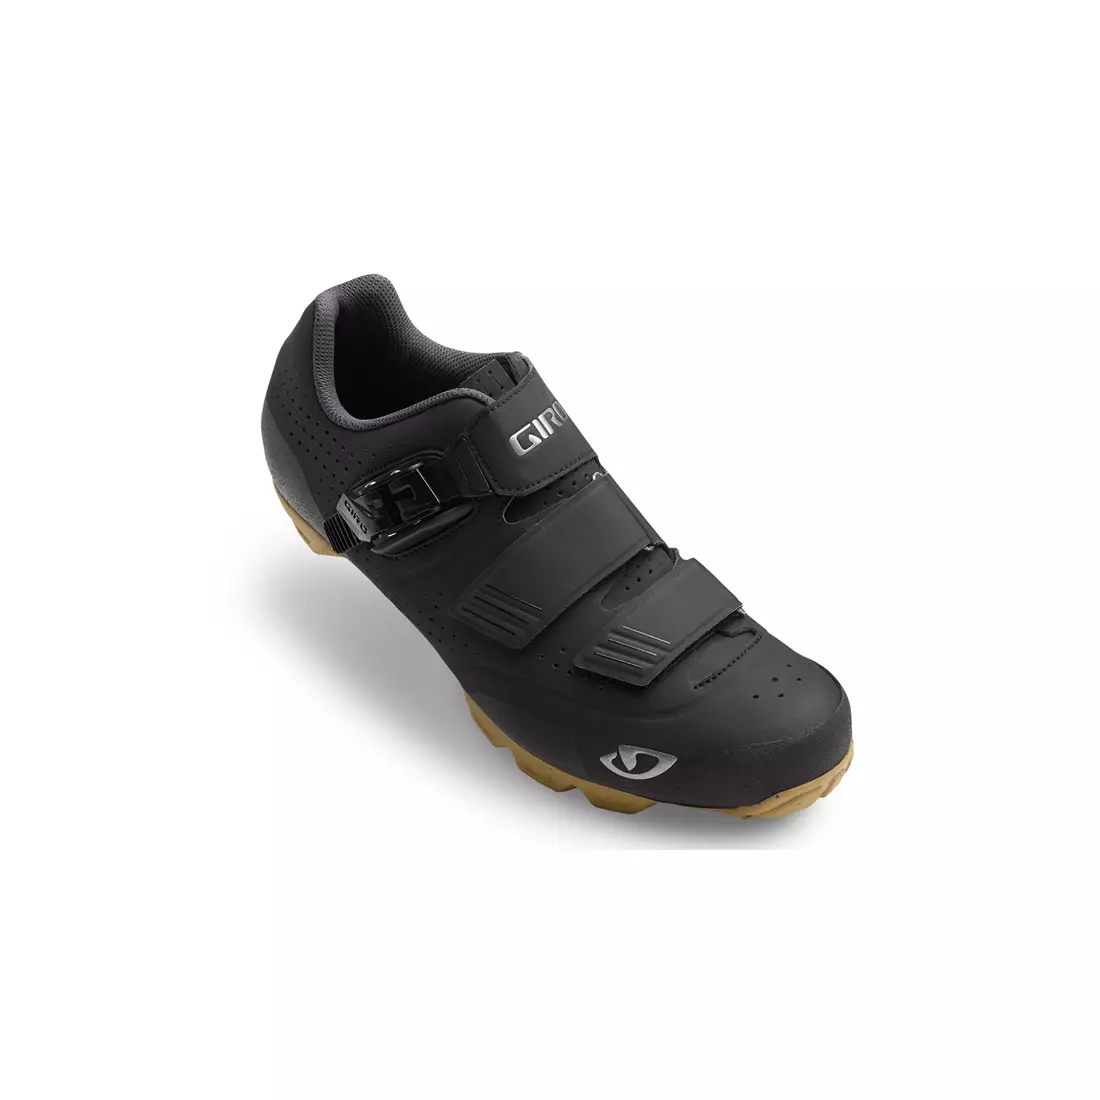 Pánská cyklistická obuv GIRO PRIVATEER R black gum 